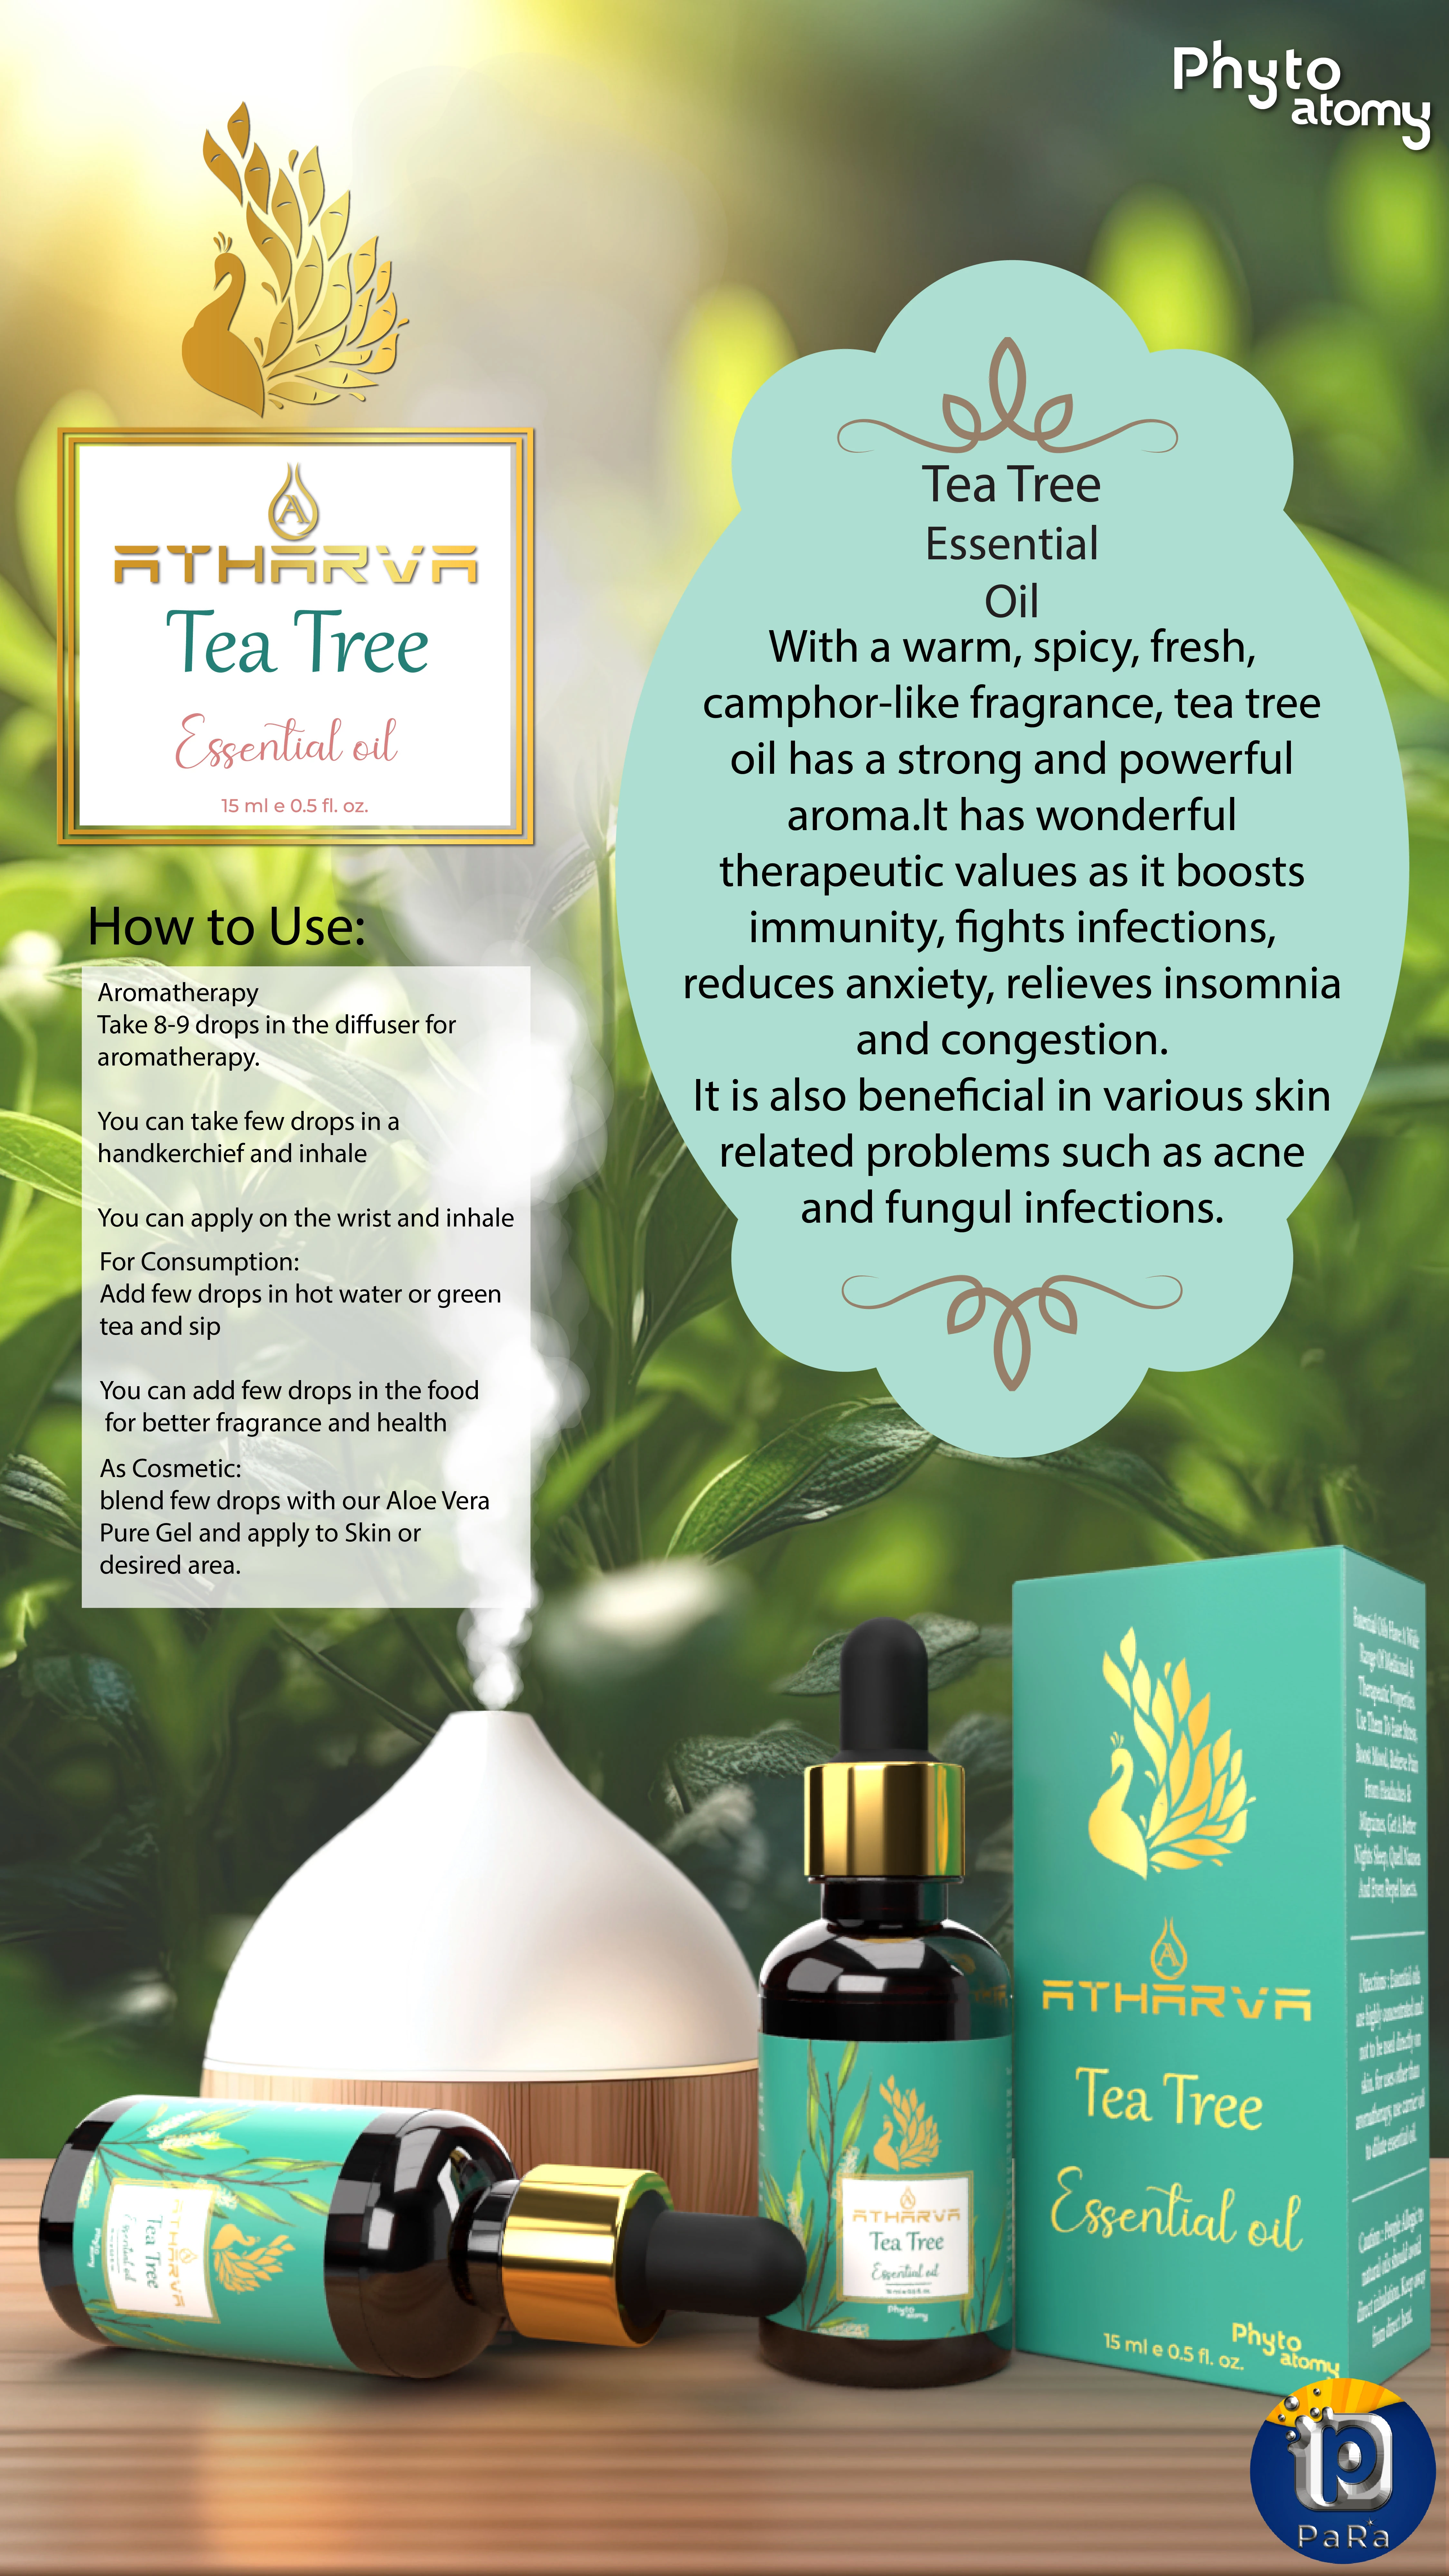 RBV B2B Atharva Tea Tree Essential Oil (15ml)-12 Pcs.